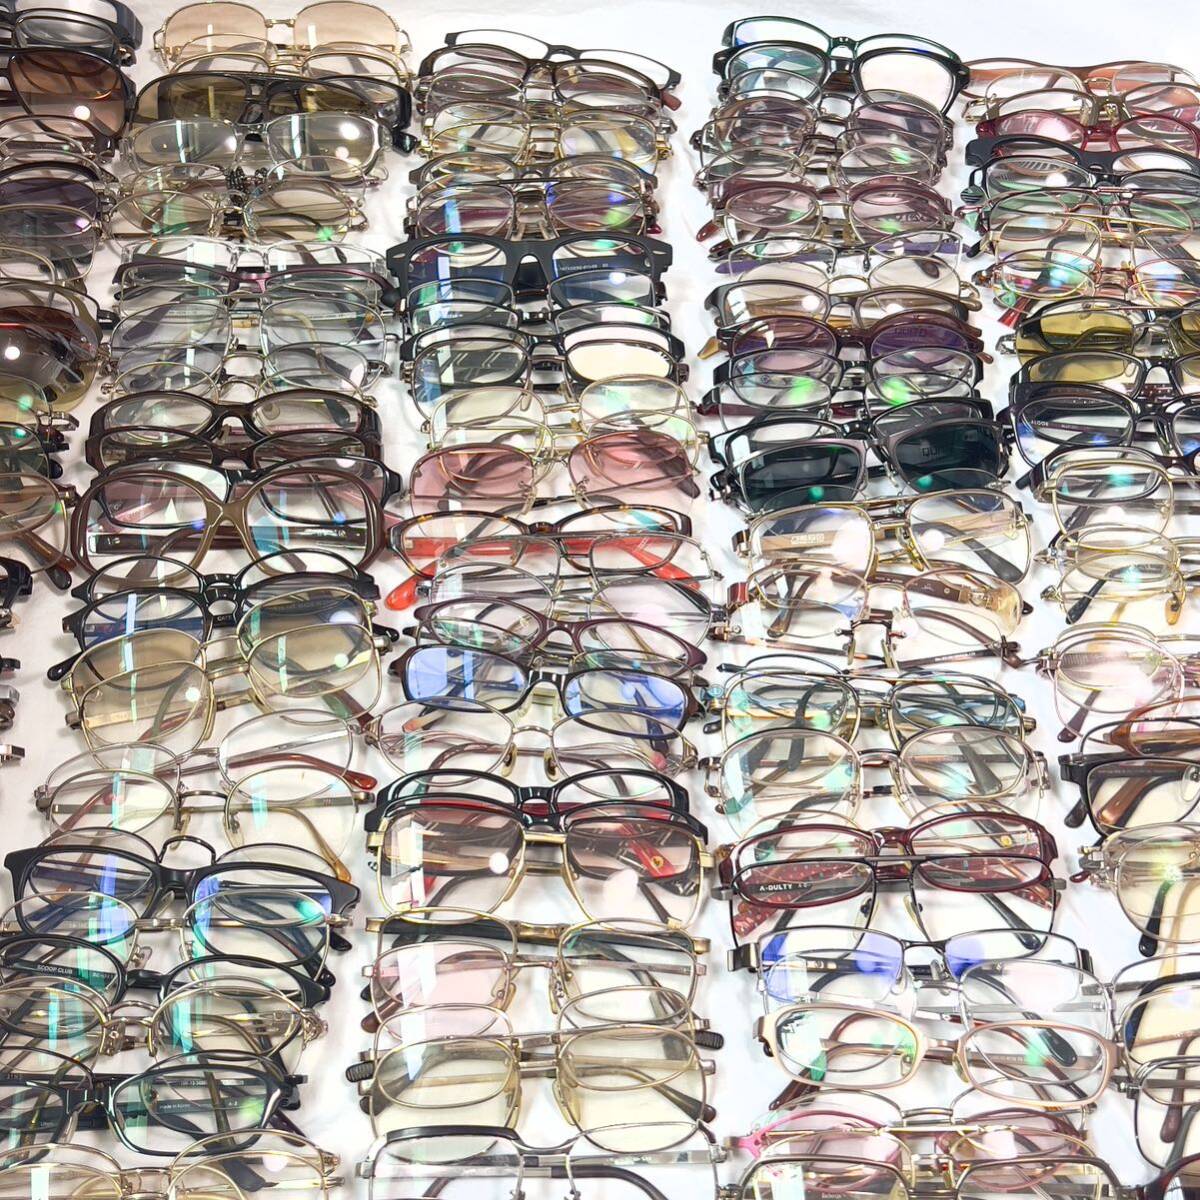  Junk glasses glasses frame 200 point and more set sale ③ Dunhill Givenchy Yves Saint-Laurent YSL etc. sunglasses together large amount set 